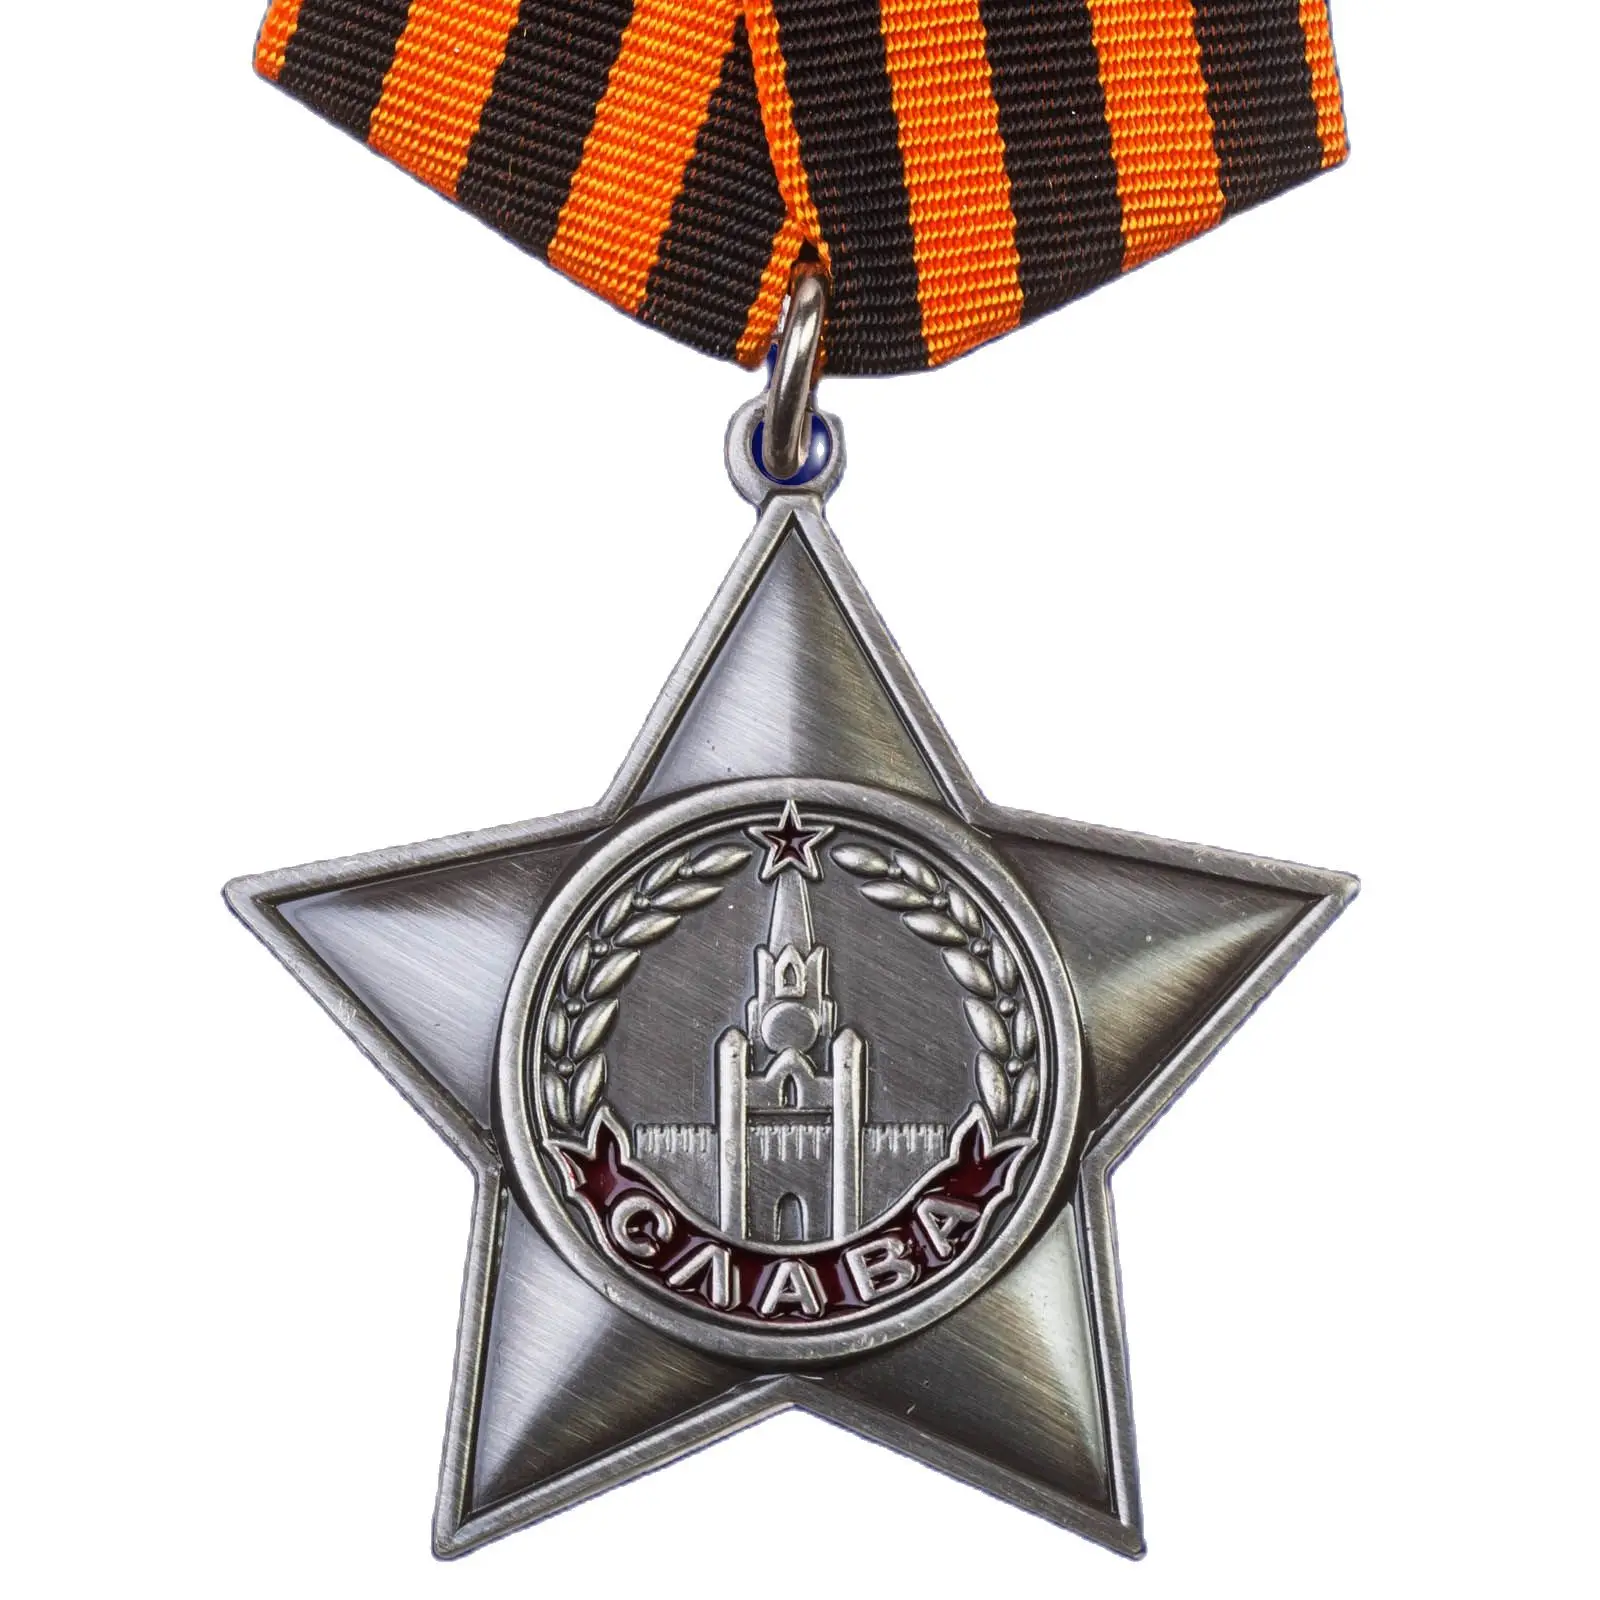 Орден Славы 3 степени, реплика Ш-232 | AliExpress